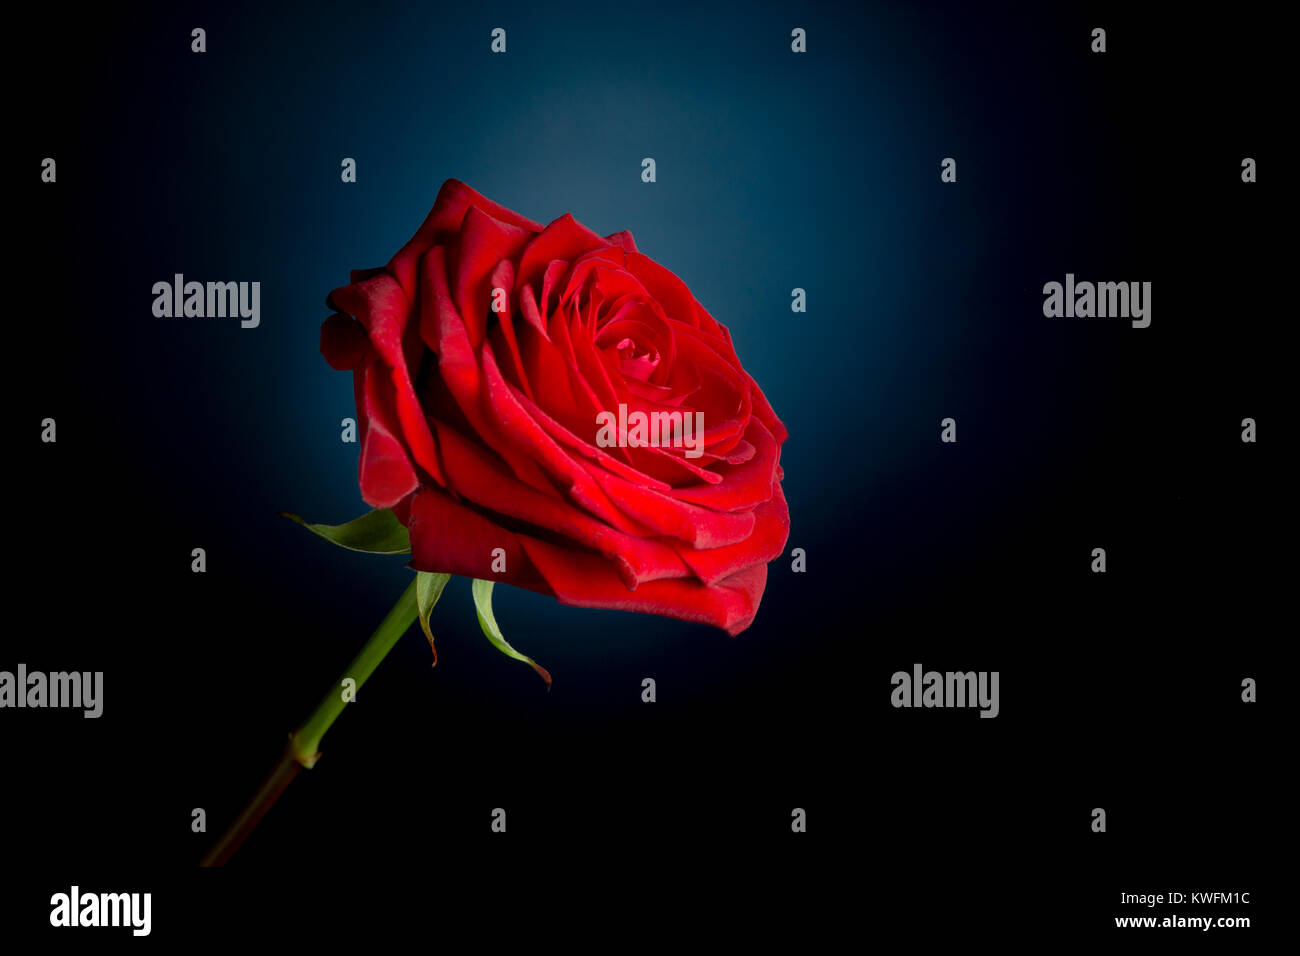 A single rose on a black background Stock Photo